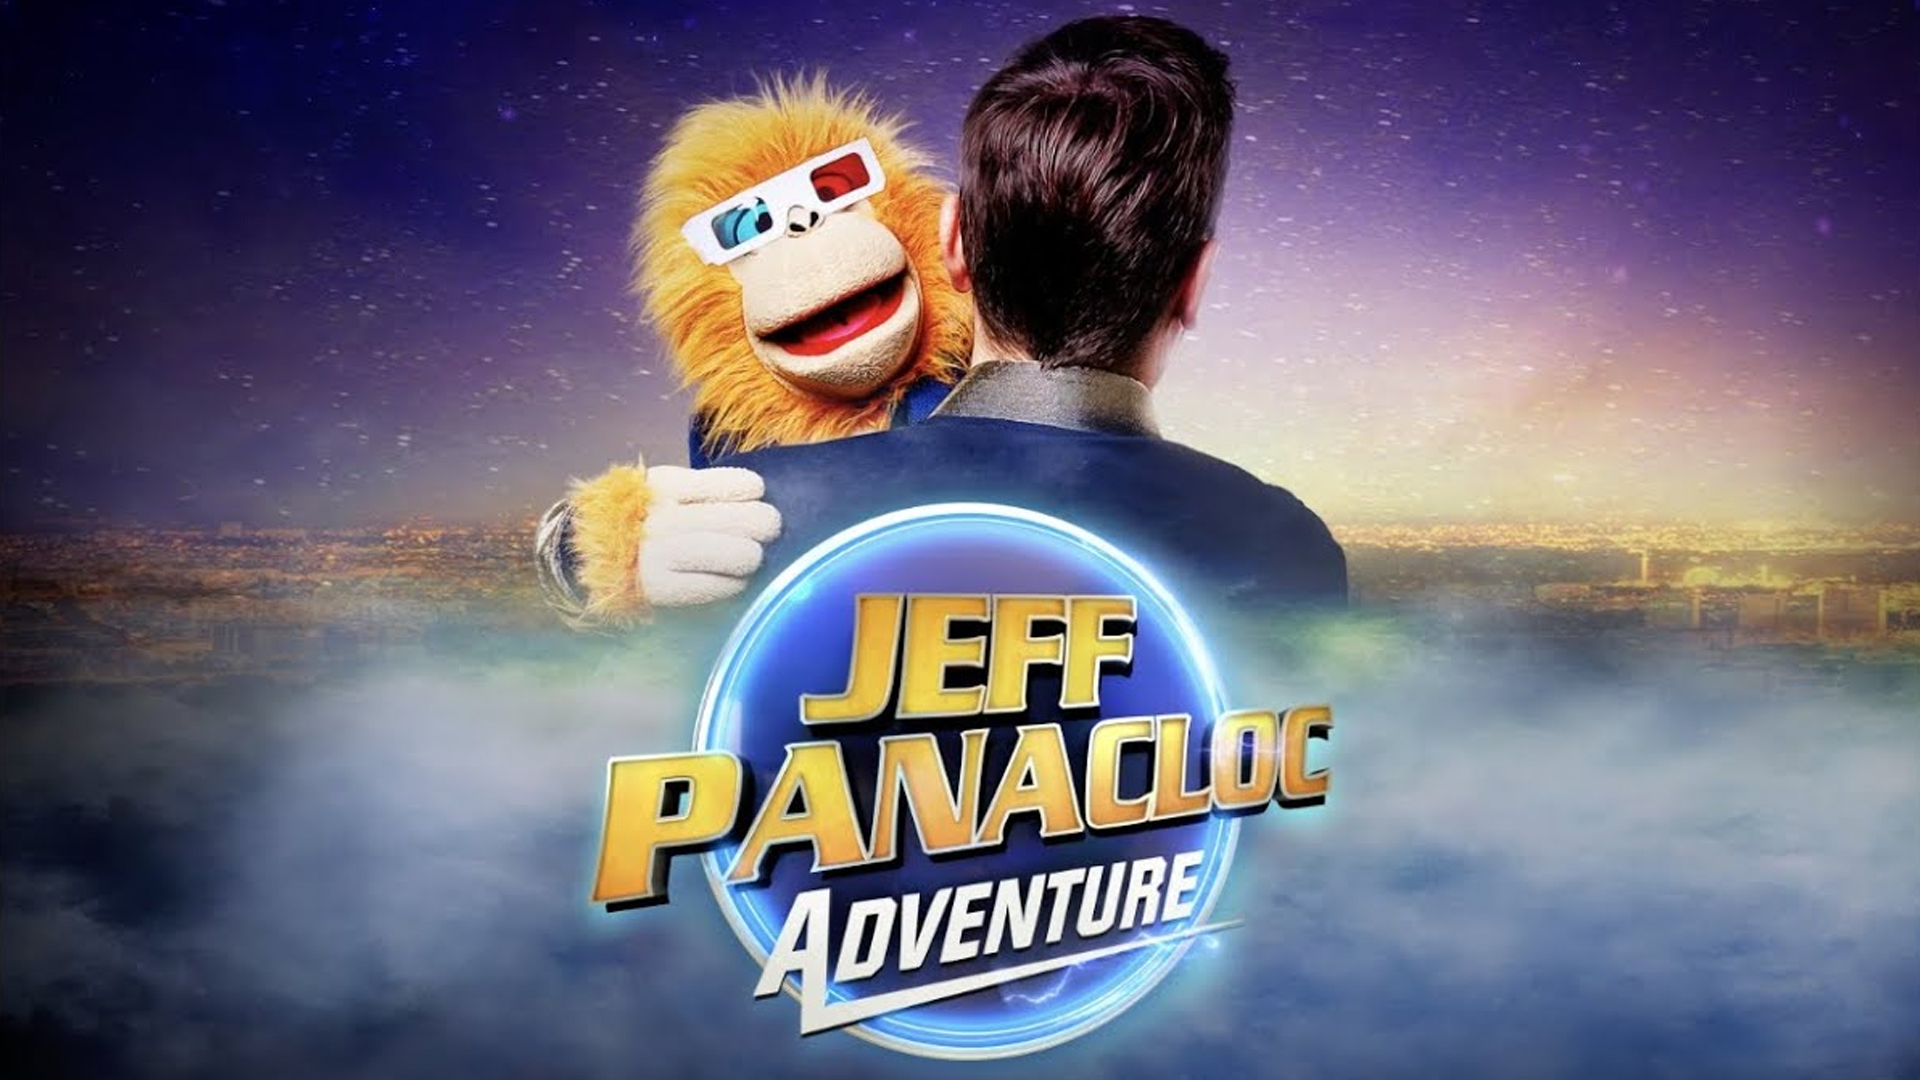 Jeff Panacloc Adventure